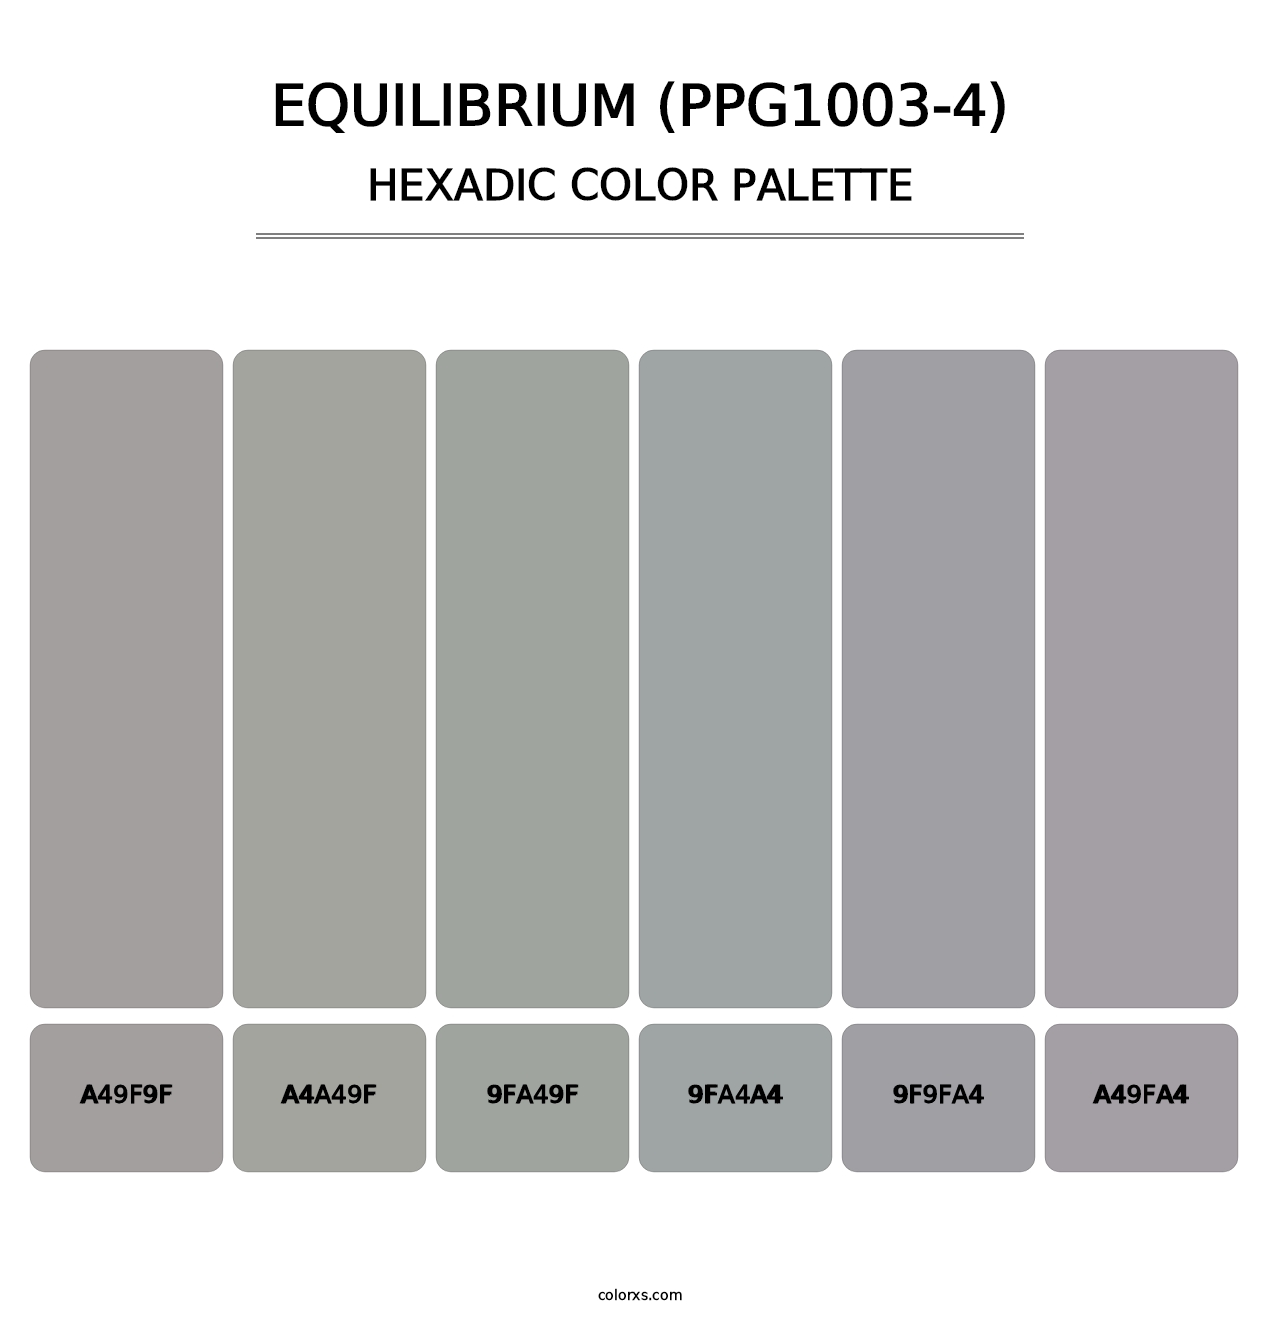 Equilibrium (PPG1003-4) - Hexadic Color Palette